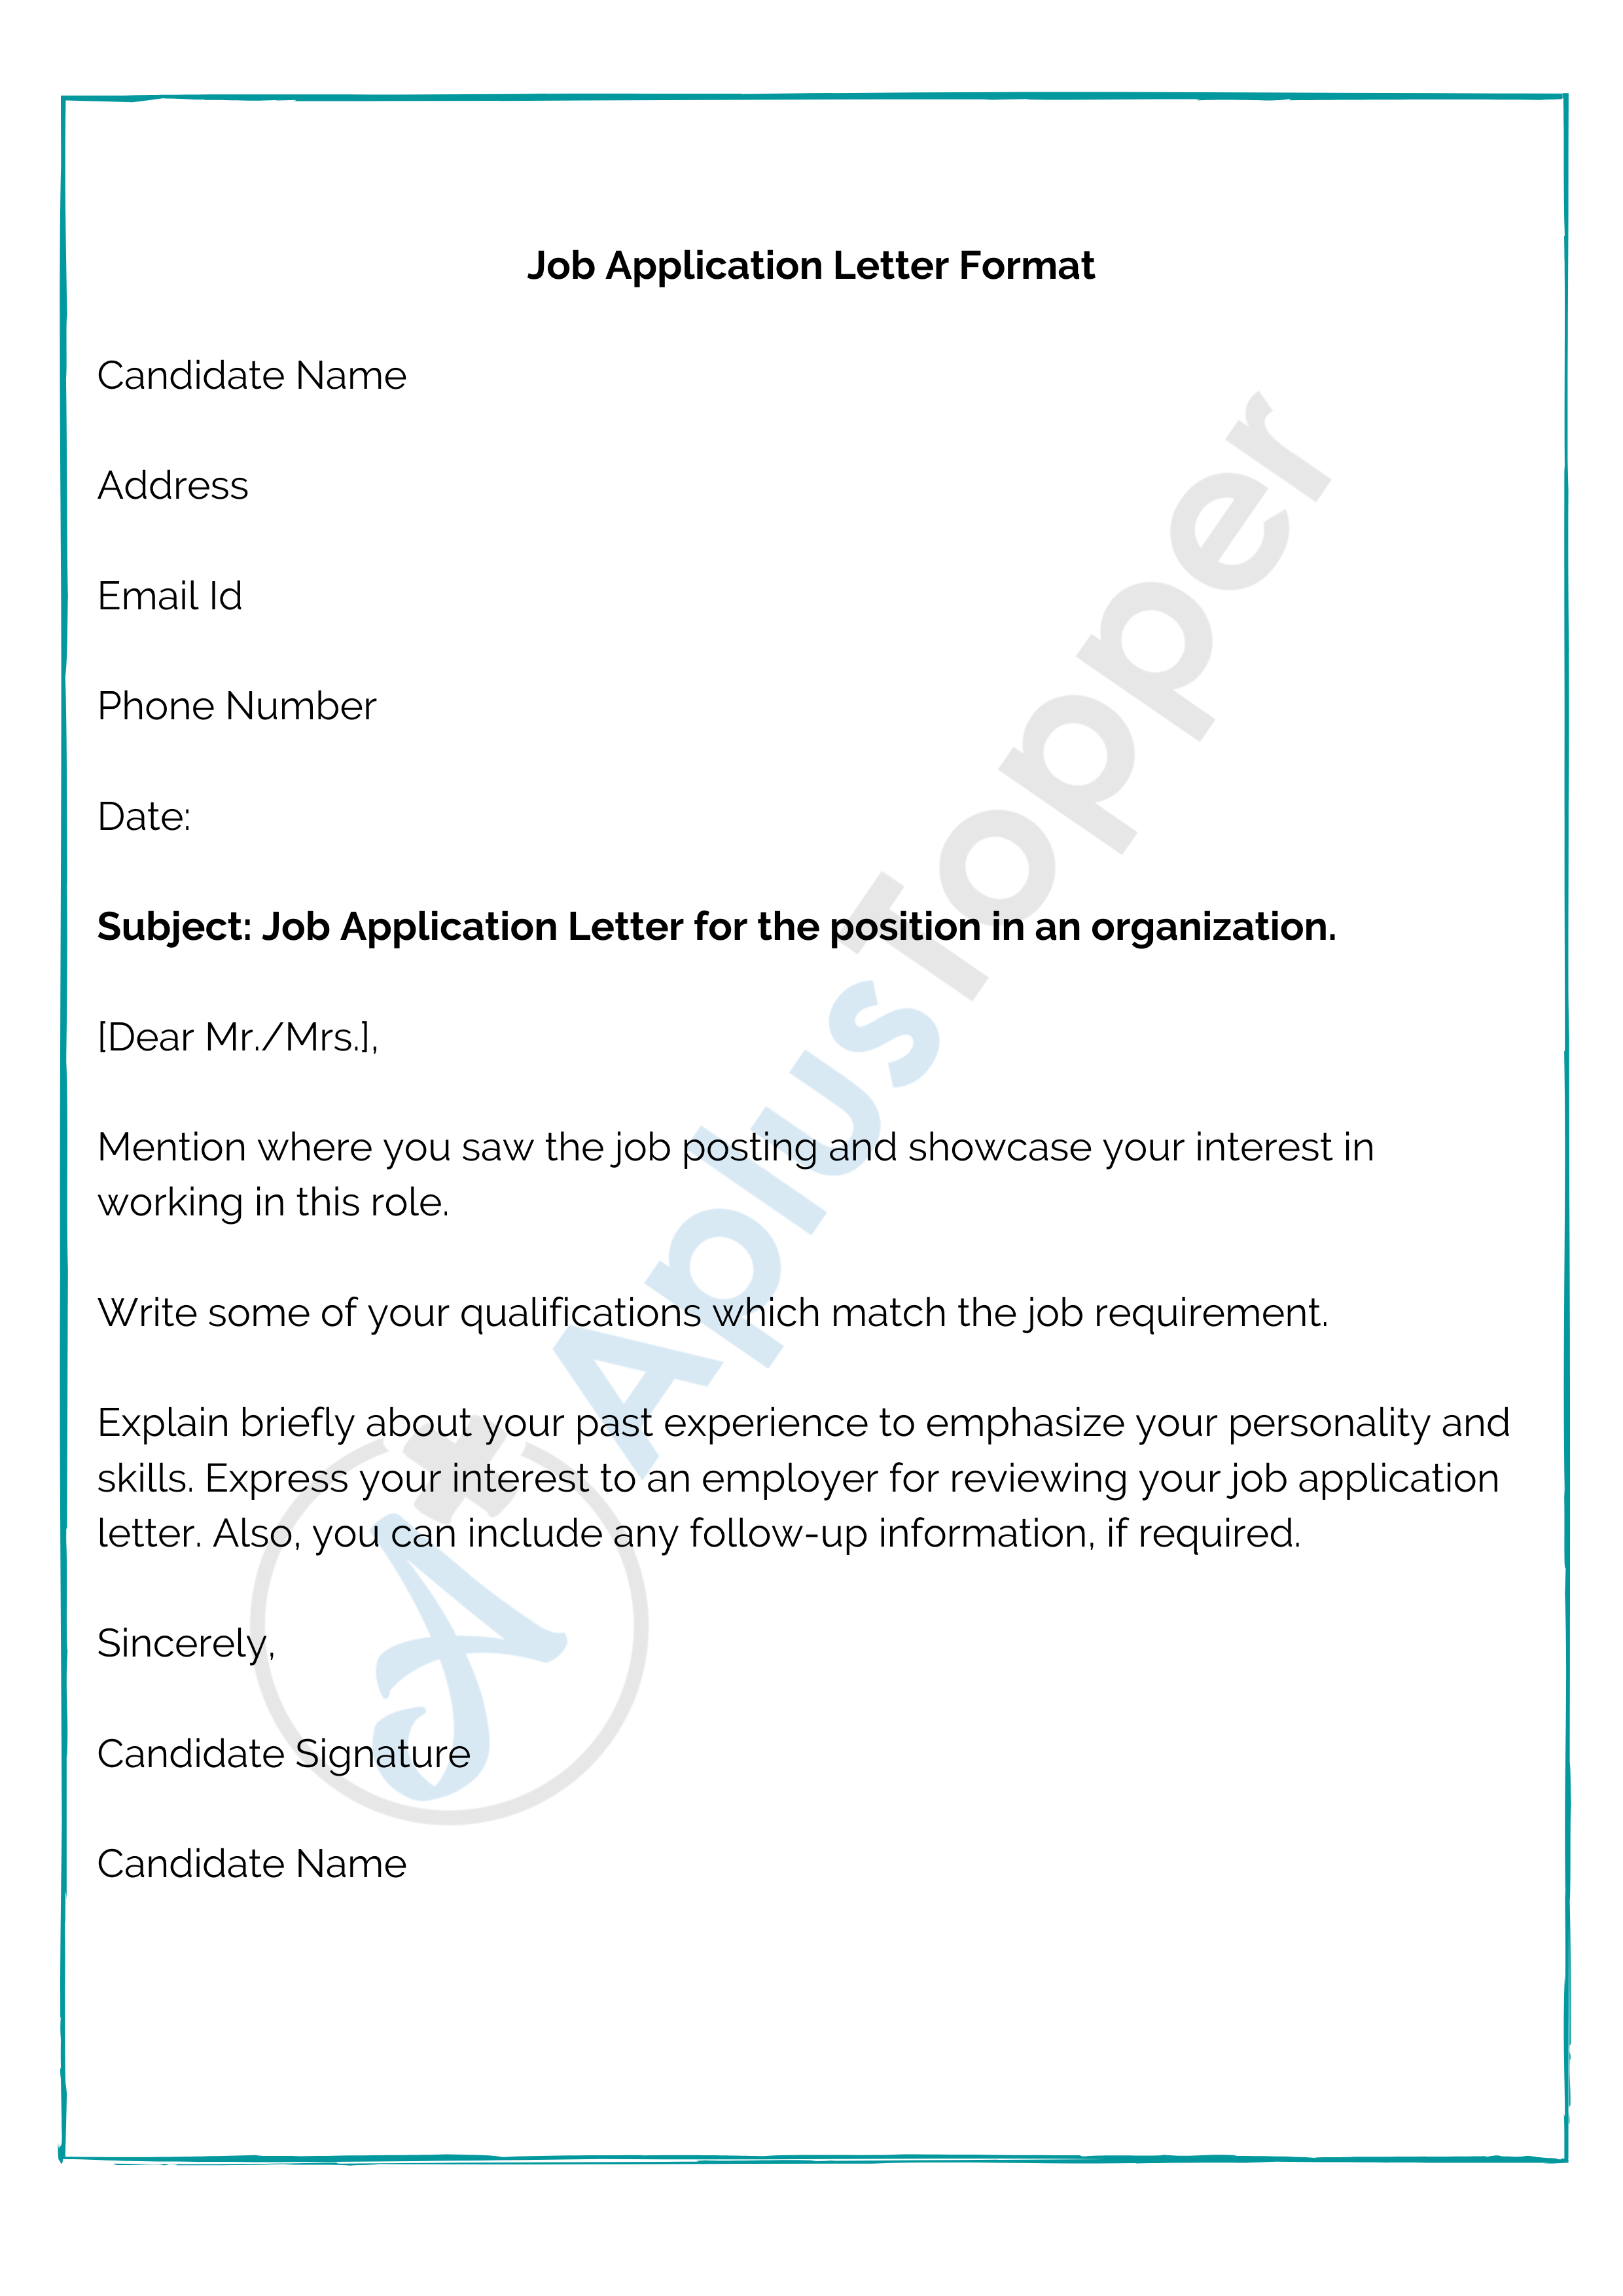 application letter advertised job